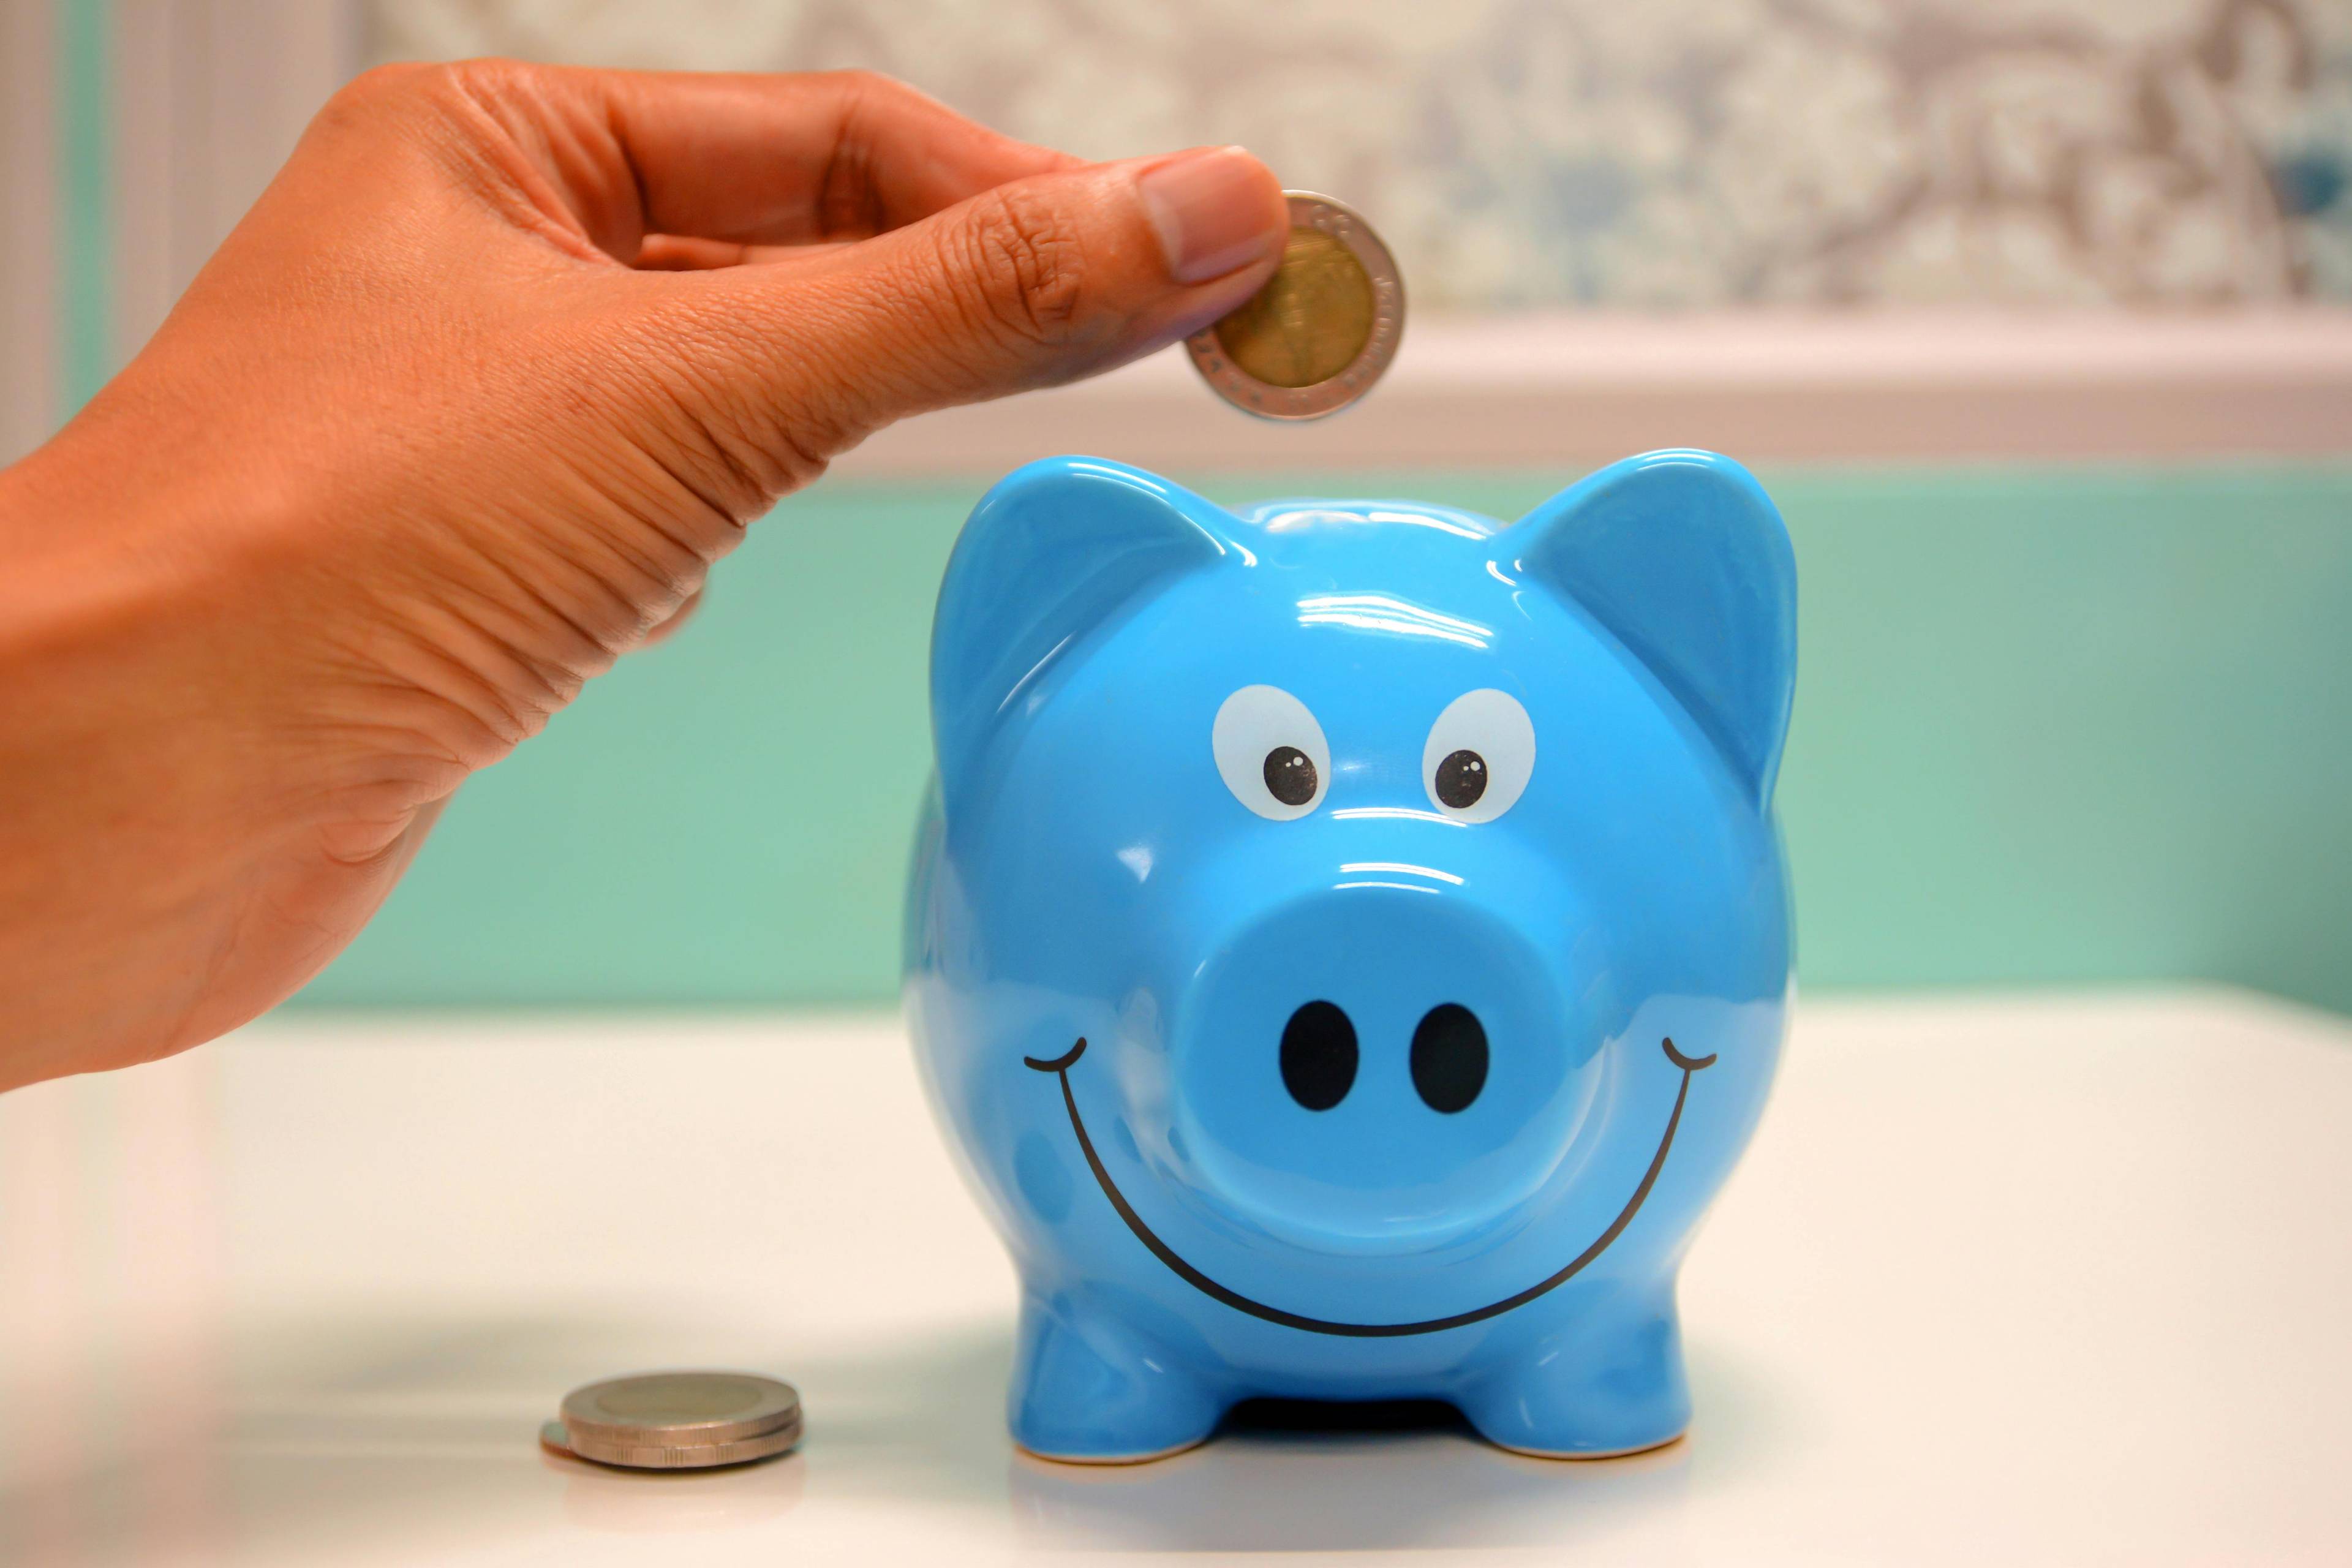 a hand placing a coin in a blue piggy bank